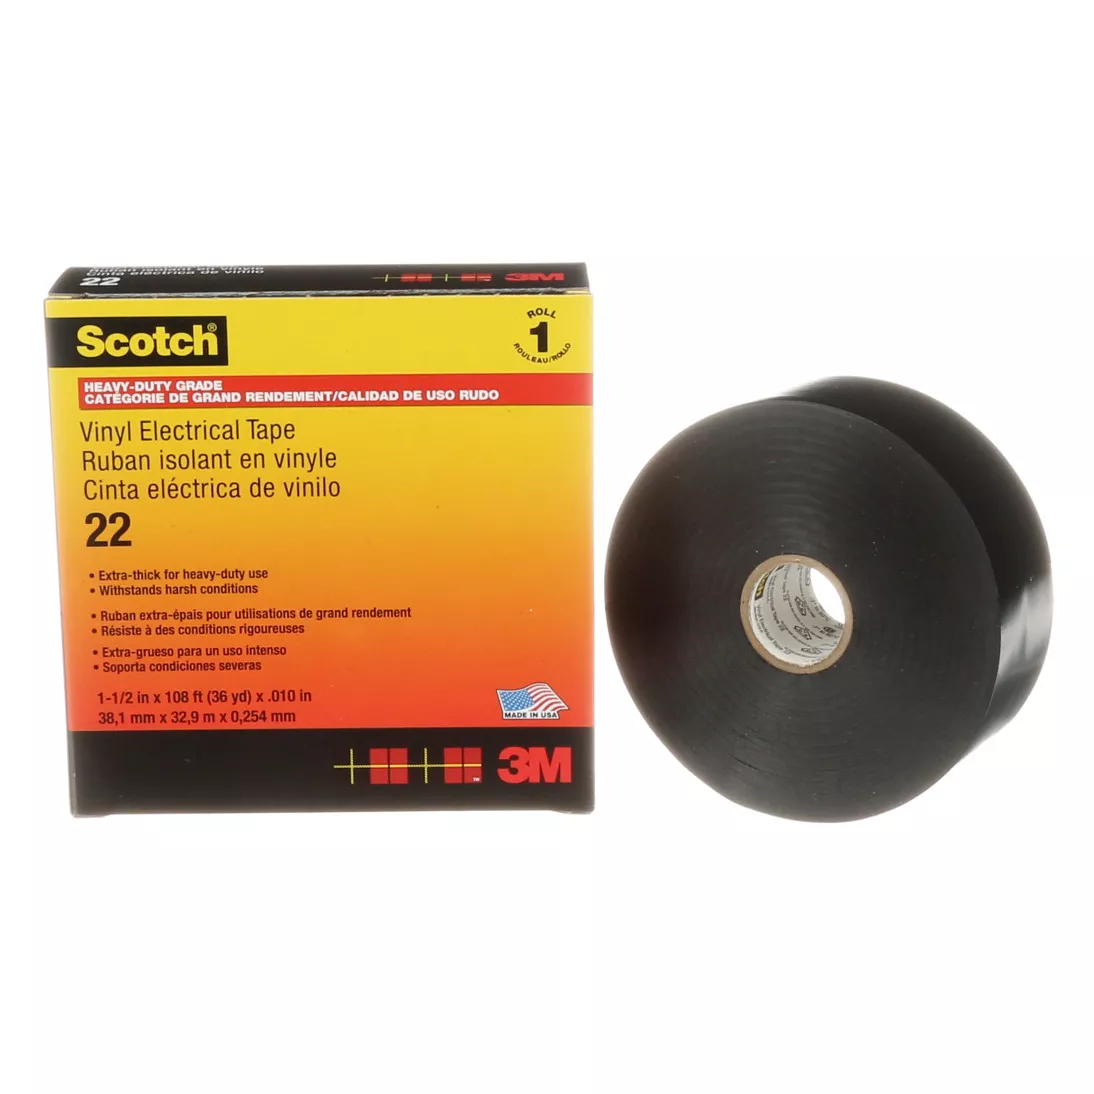 Scotch® Vinyl Electrical Tape 22, 1-1/2 in x 36 yd, Black, 1
roll/carton, 12 rolls/Case